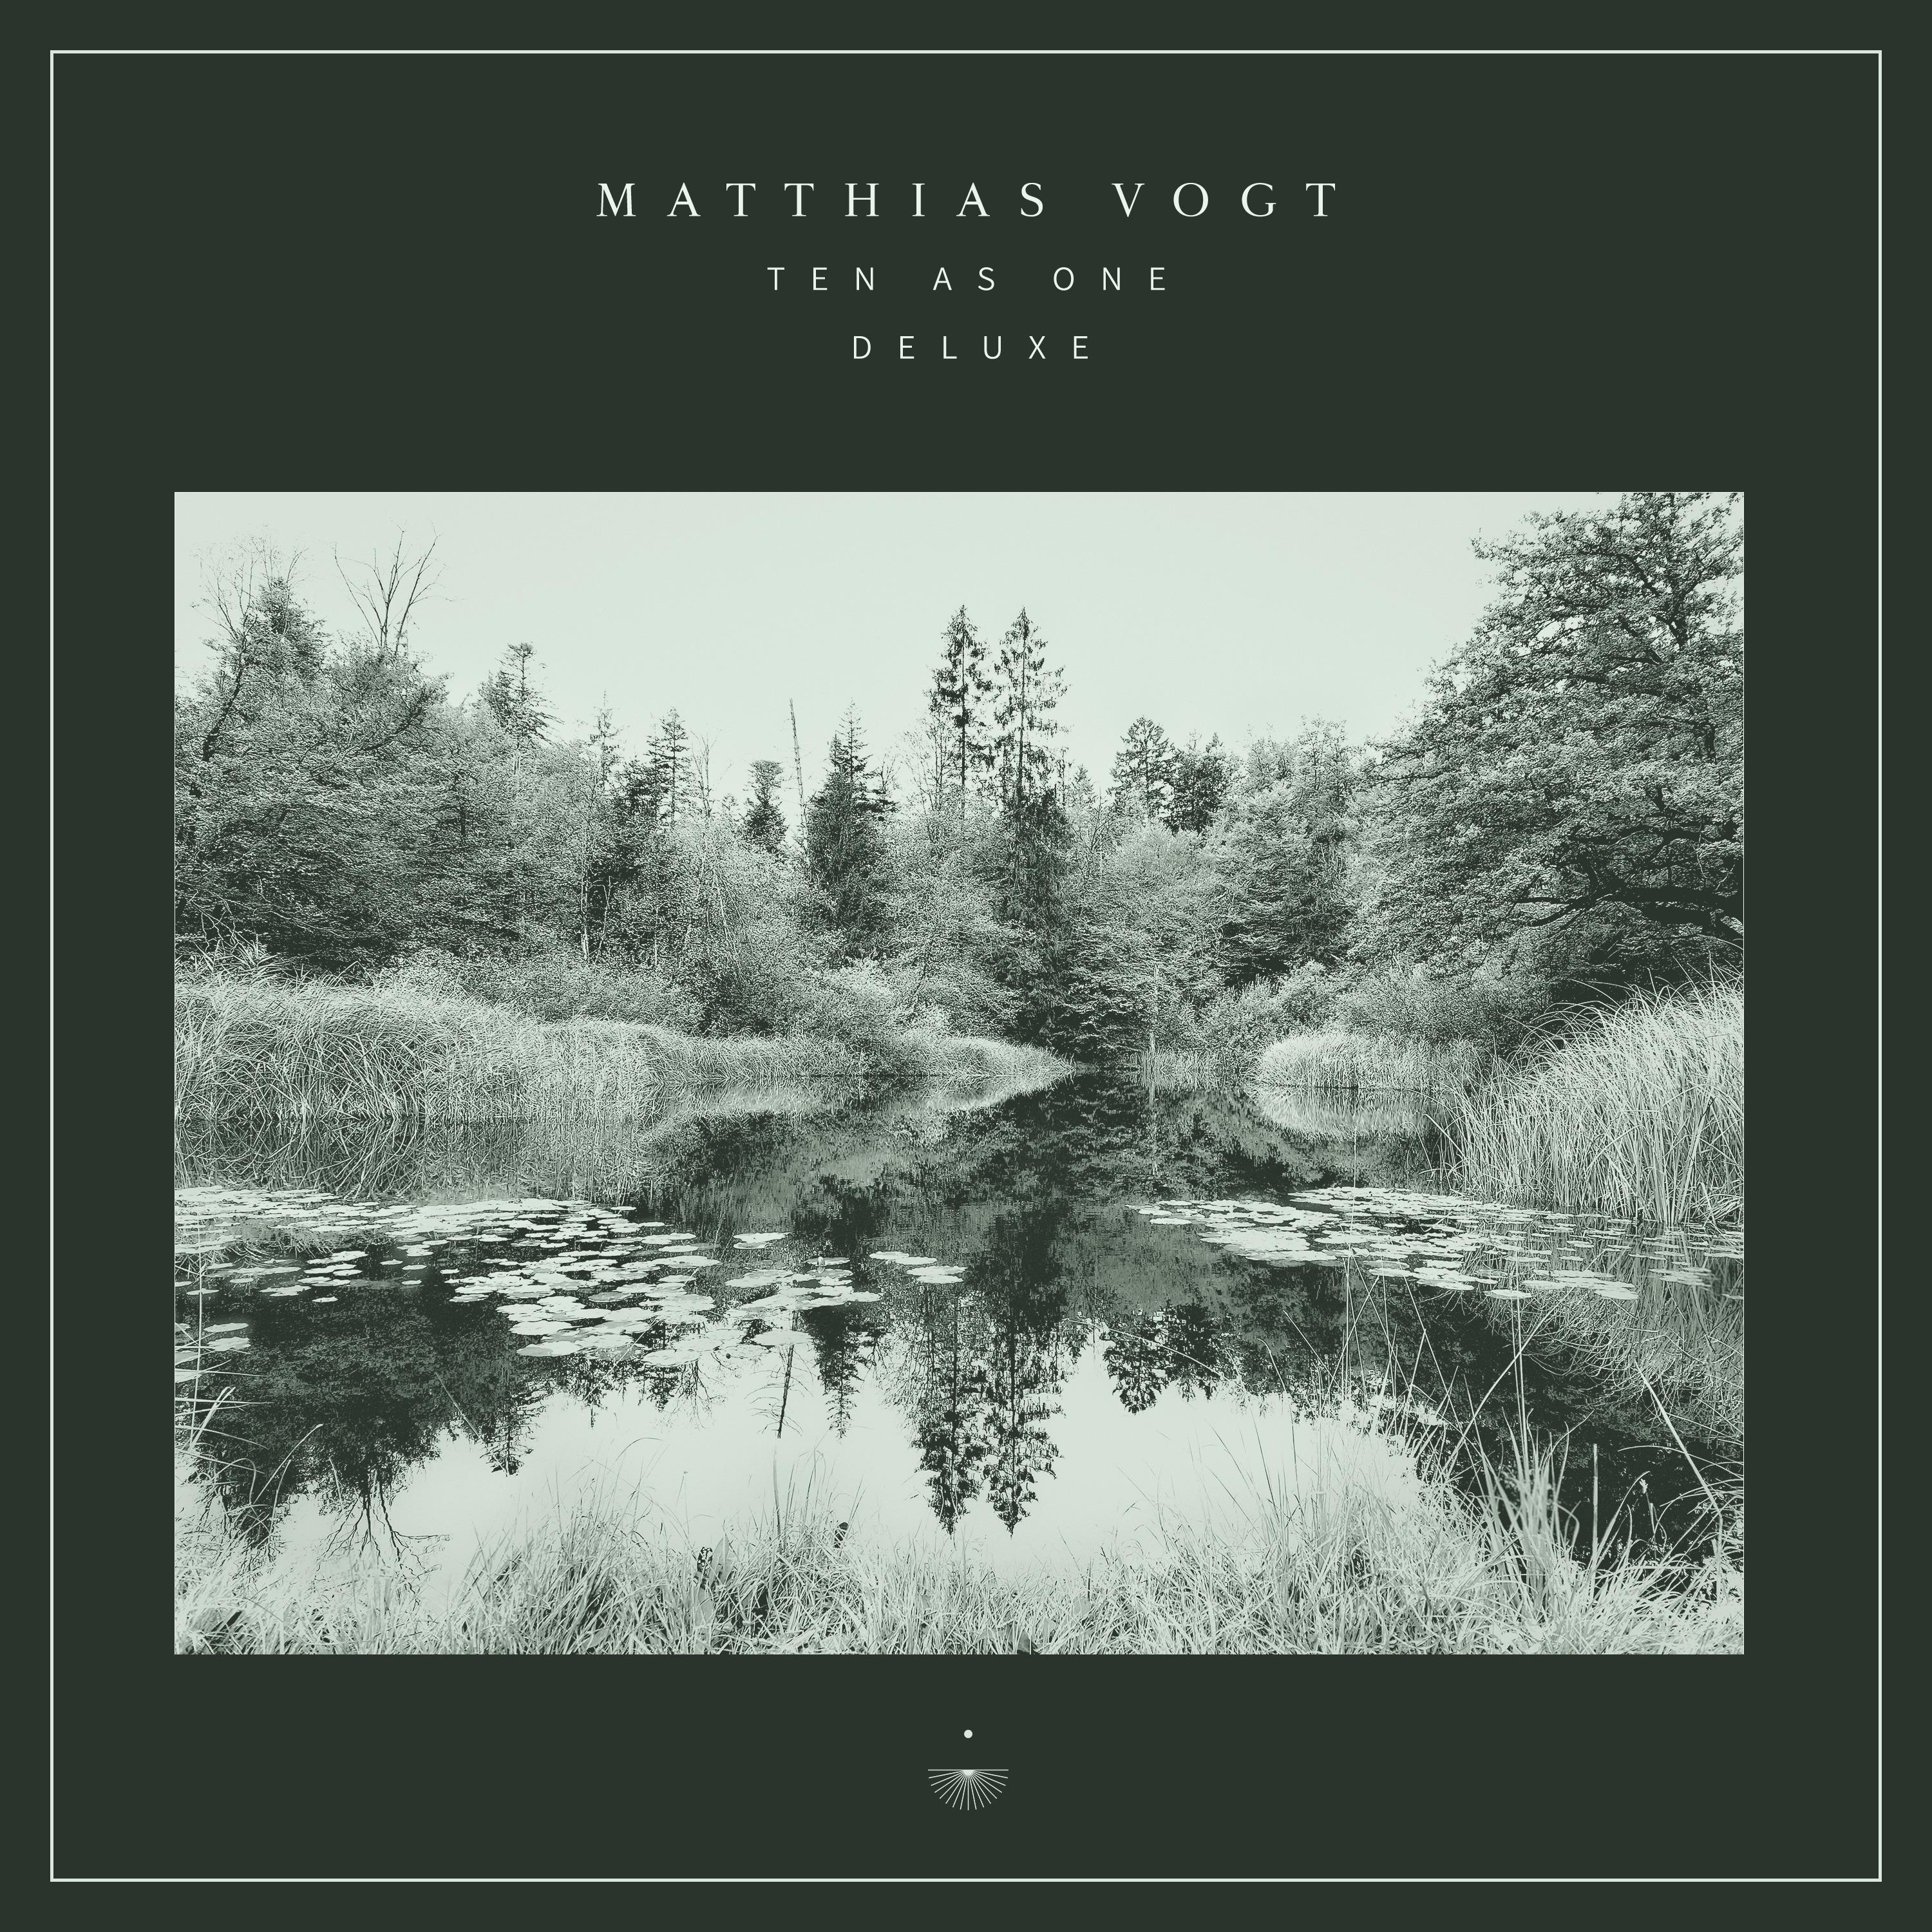 Matthias Vogt - The Fall (Edit)